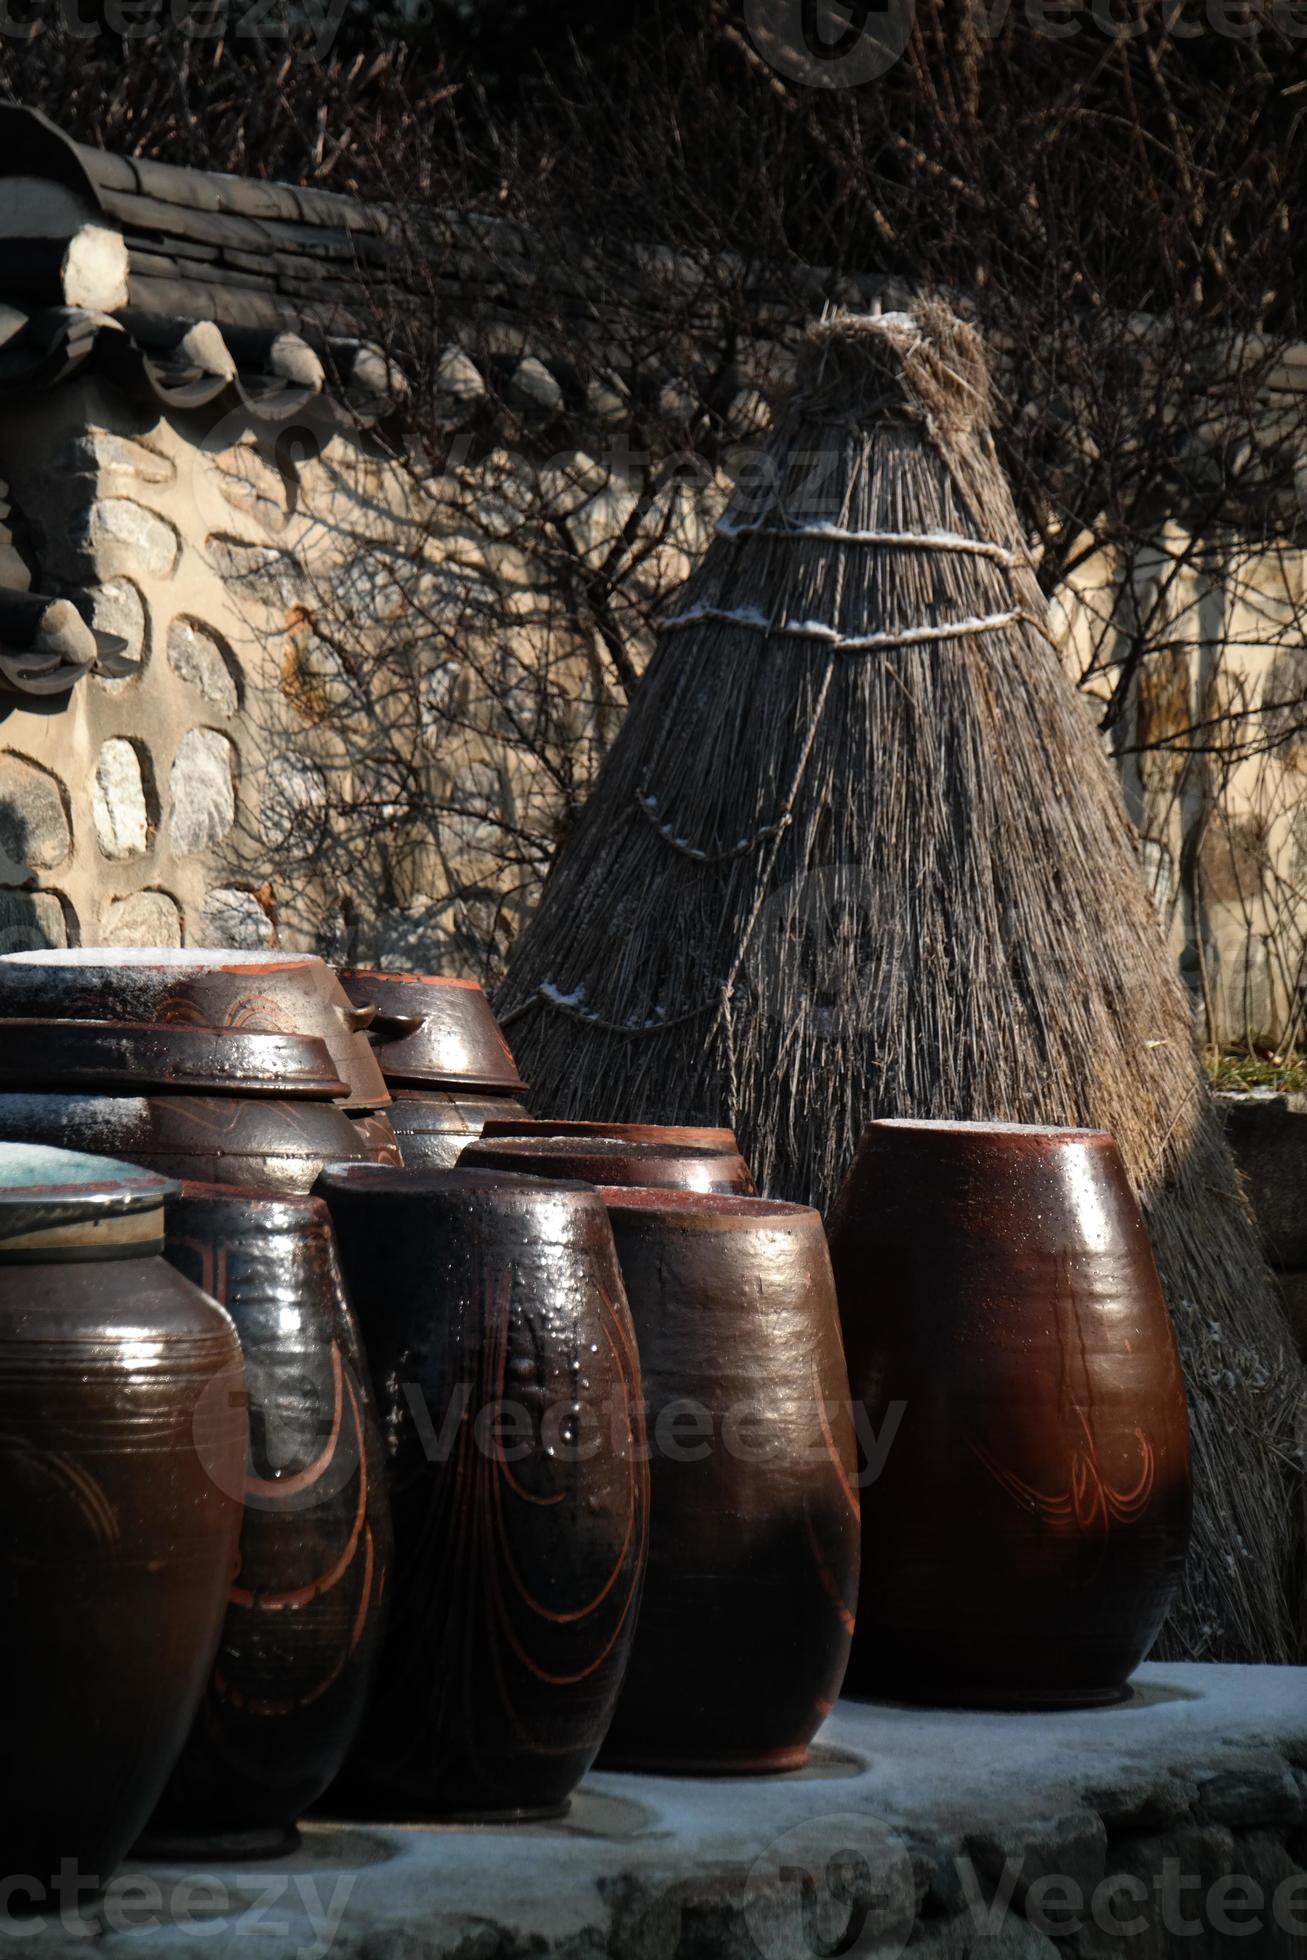 https://static.vecteezy.com/system/resources/previews/003/313/136/large_2x/kimchi-traditional-fermentation-ceramic-vase-photo.JPG